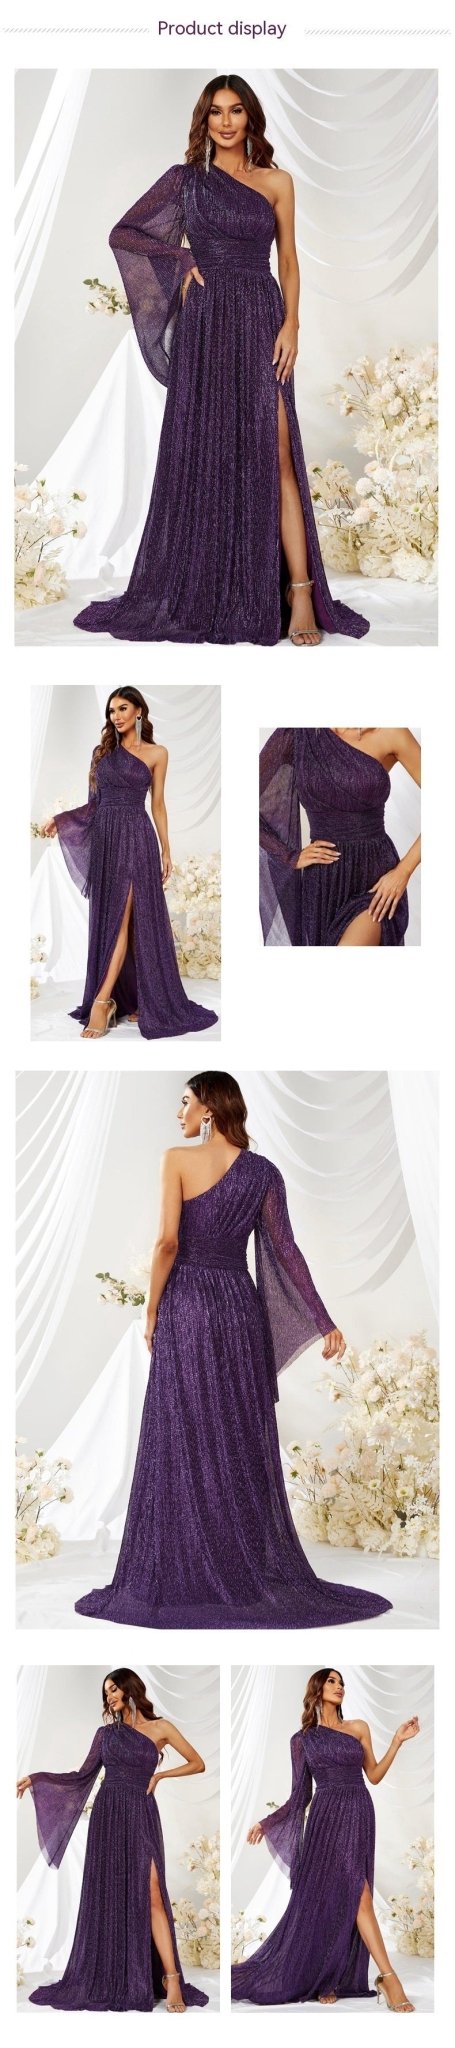 Oblique Shoulder Tube Top Bright Silk Long Batwing Sleeve Split Super Long Dress - NextthinkShop